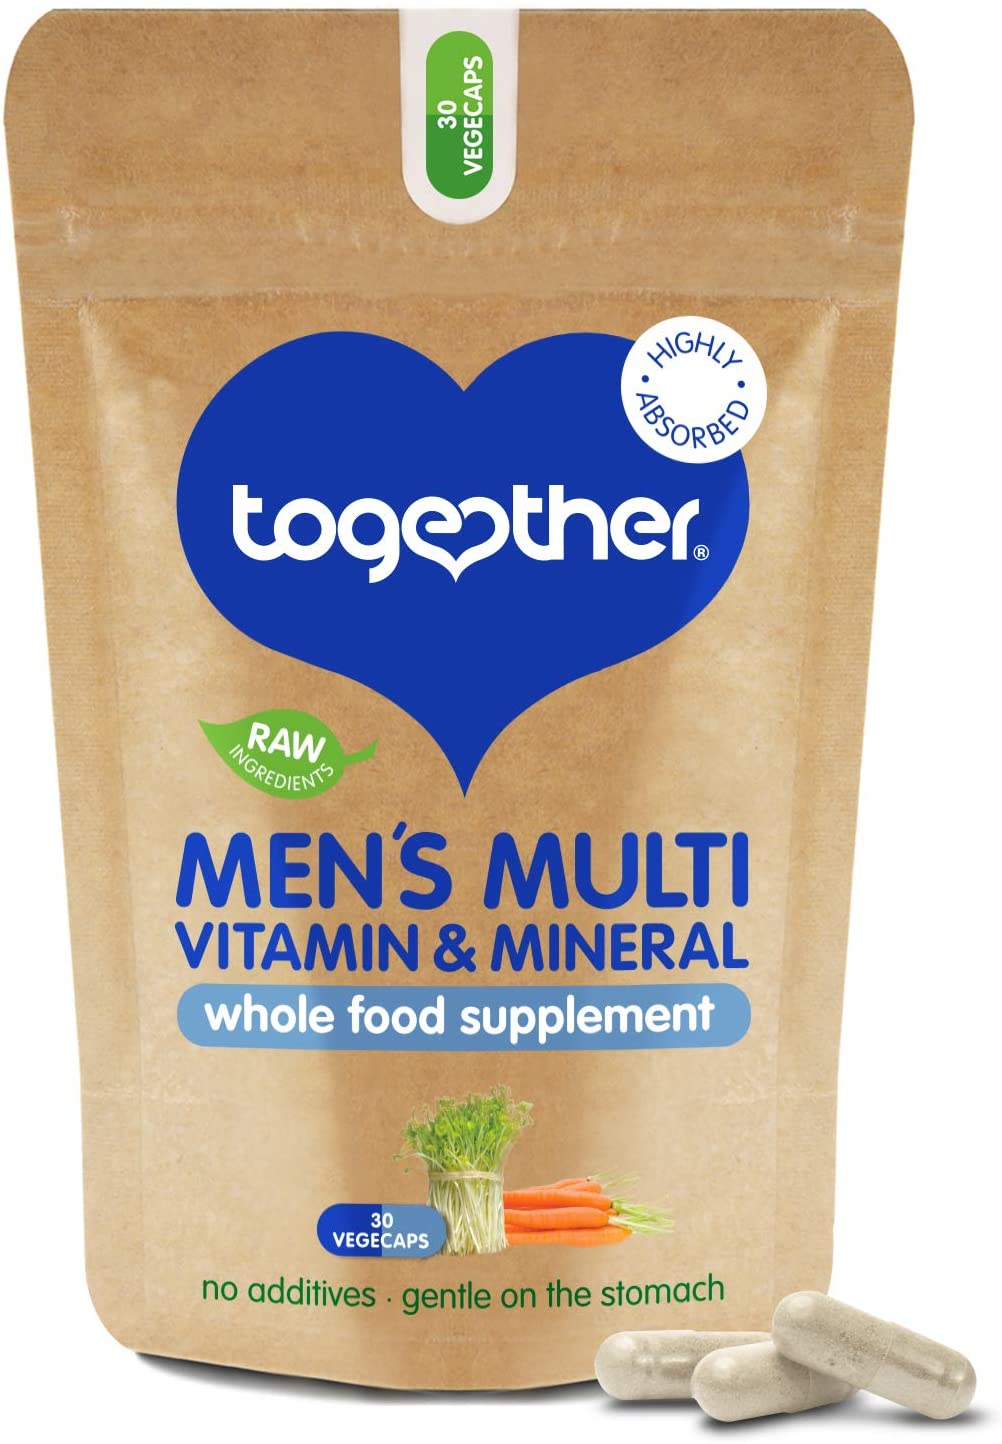 Together Men's Multi Vitamin & Mineral Whole Food Supplement- 30 Vegecaps